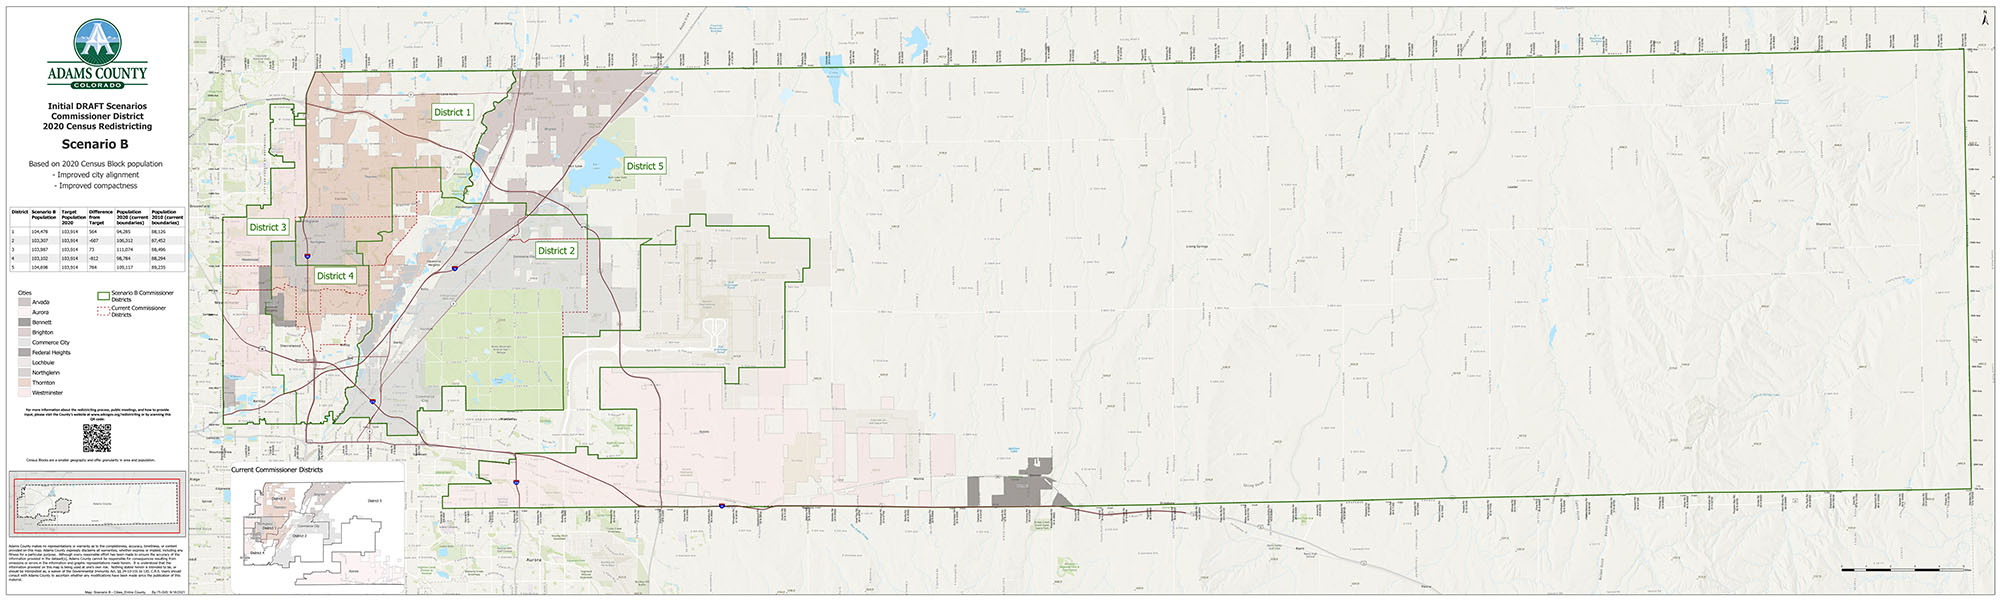 Scenario B map - entire county to eastern border